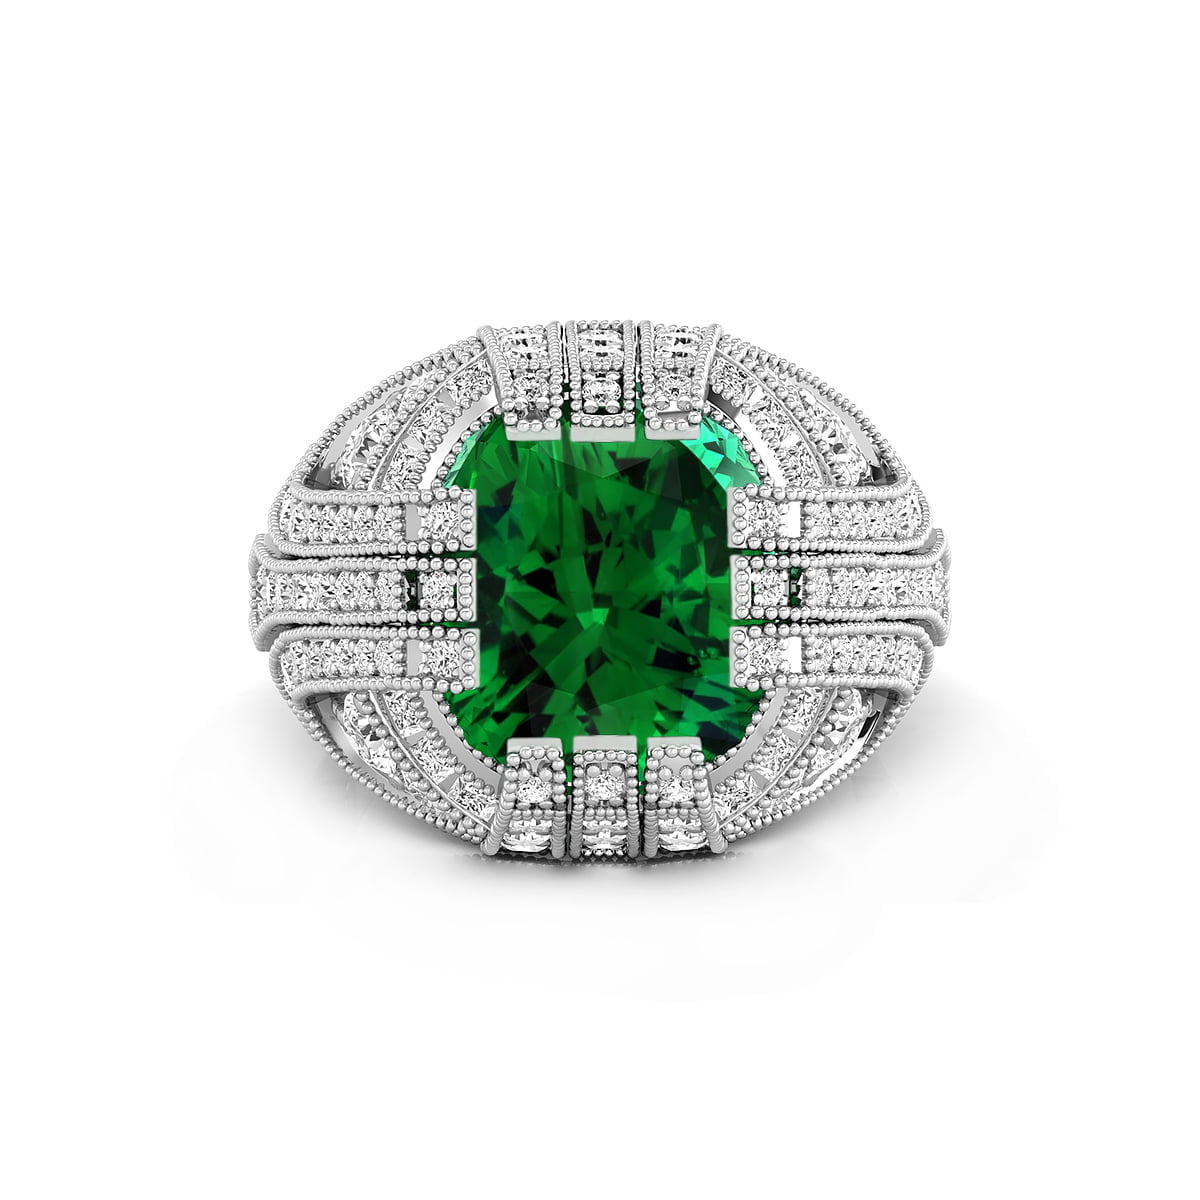 Green Cushion Cut CZ Stone Milgrain Antique Victorian Art Deco Ring For Engagement